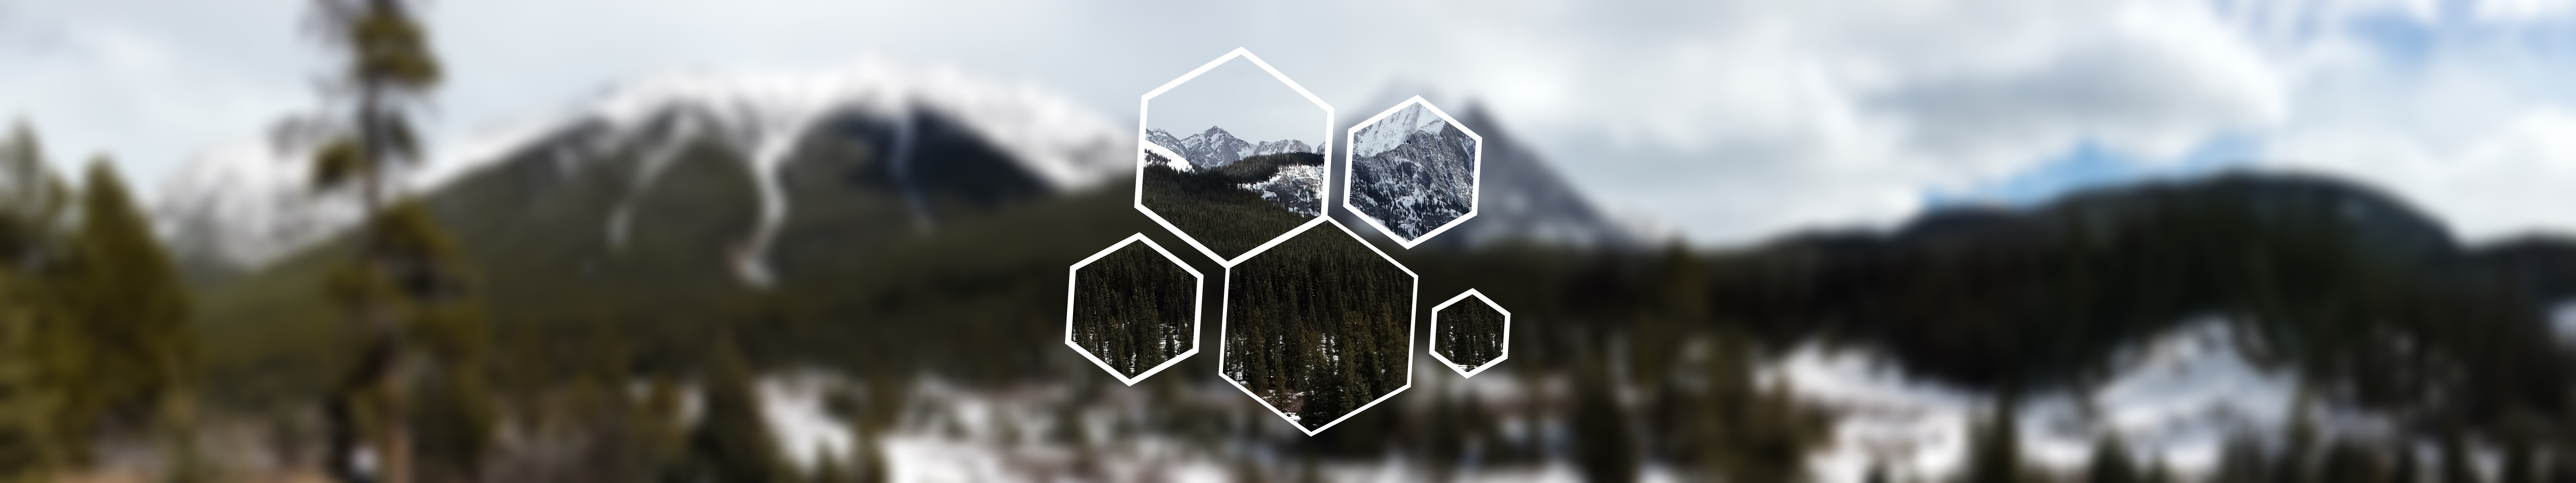 landscape, Blurred, Hexagon Wallpaper